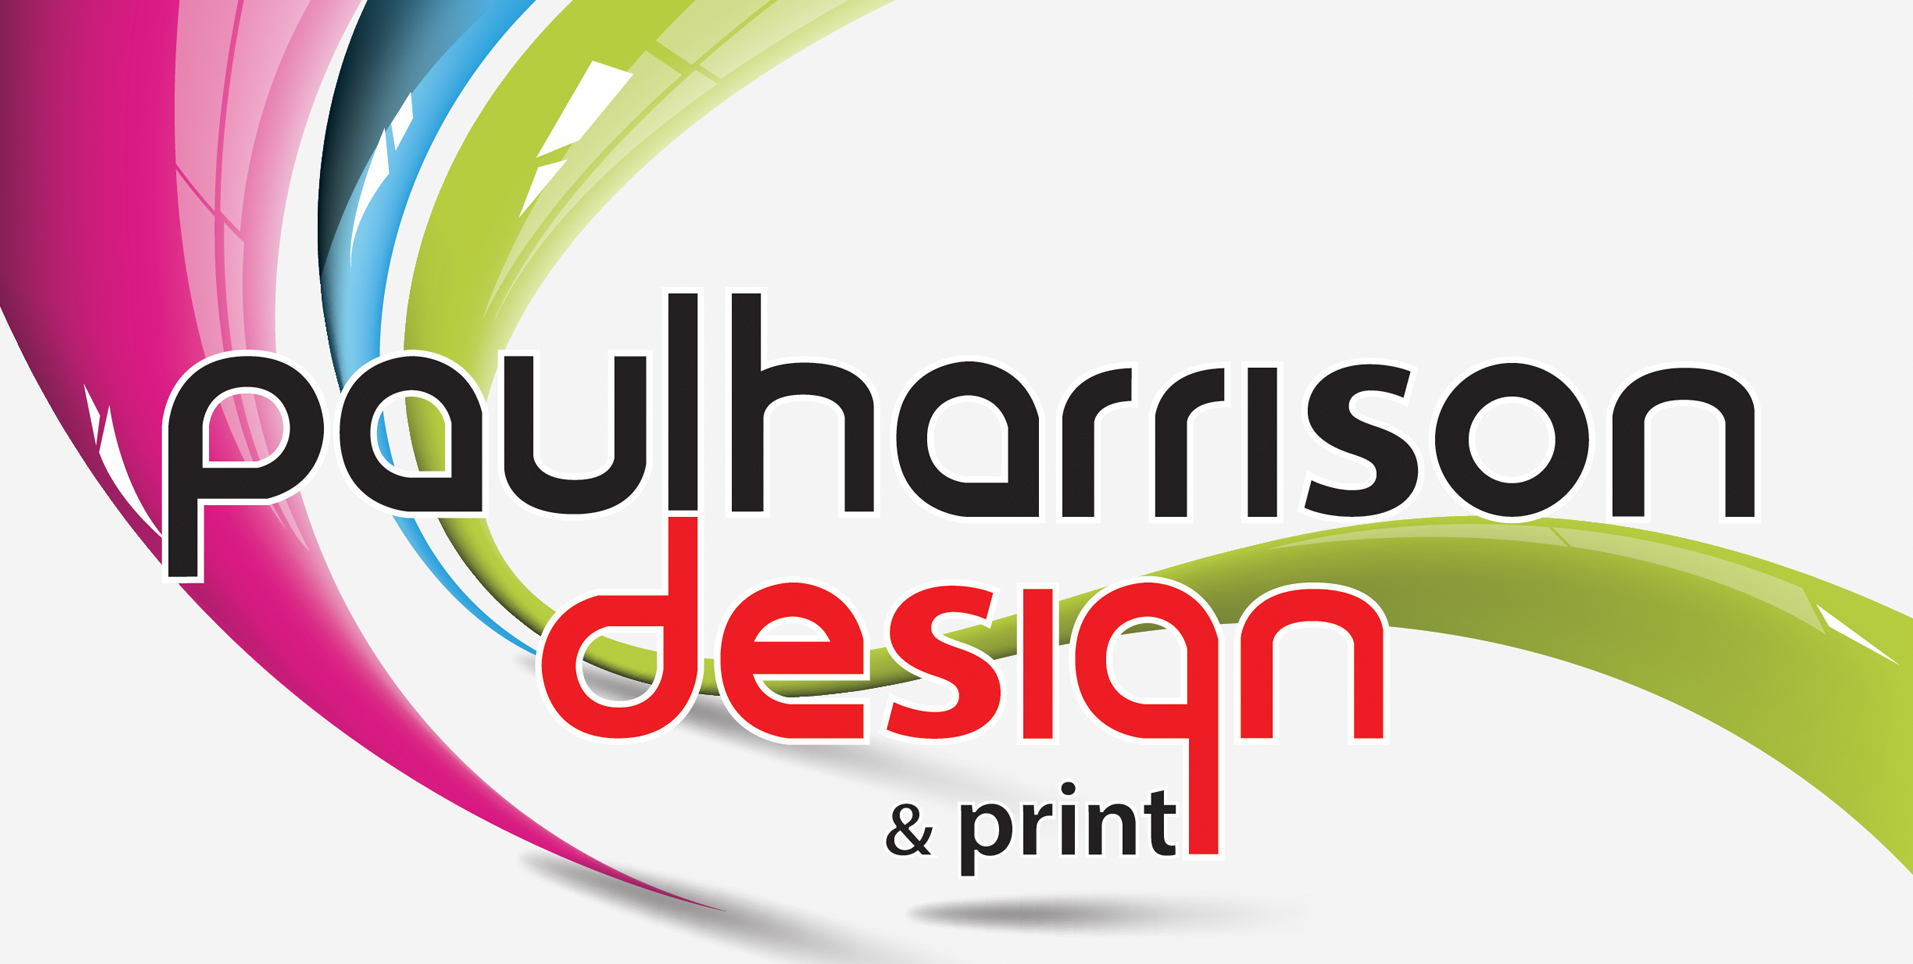 Paul Harrison Design